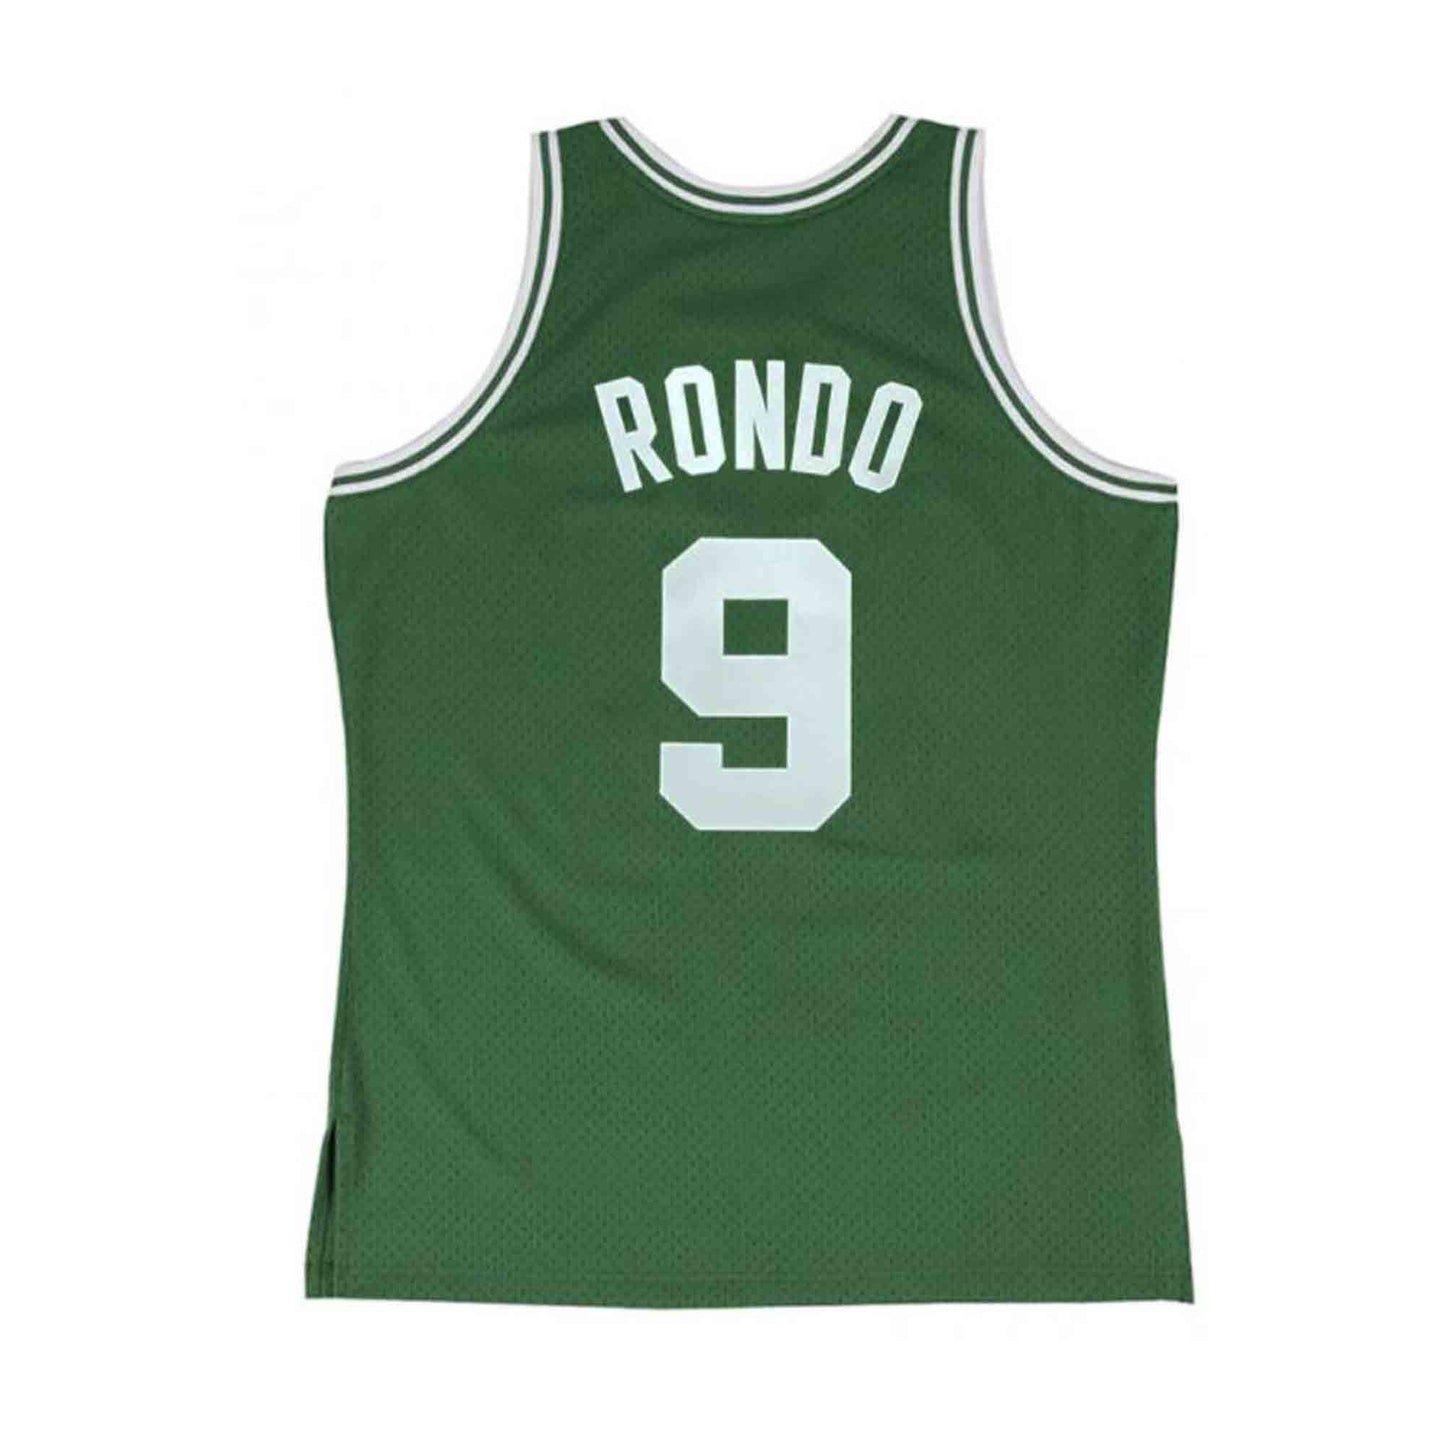 NBA Swingman Jersey Boston Celtics Rajon Rondo #9